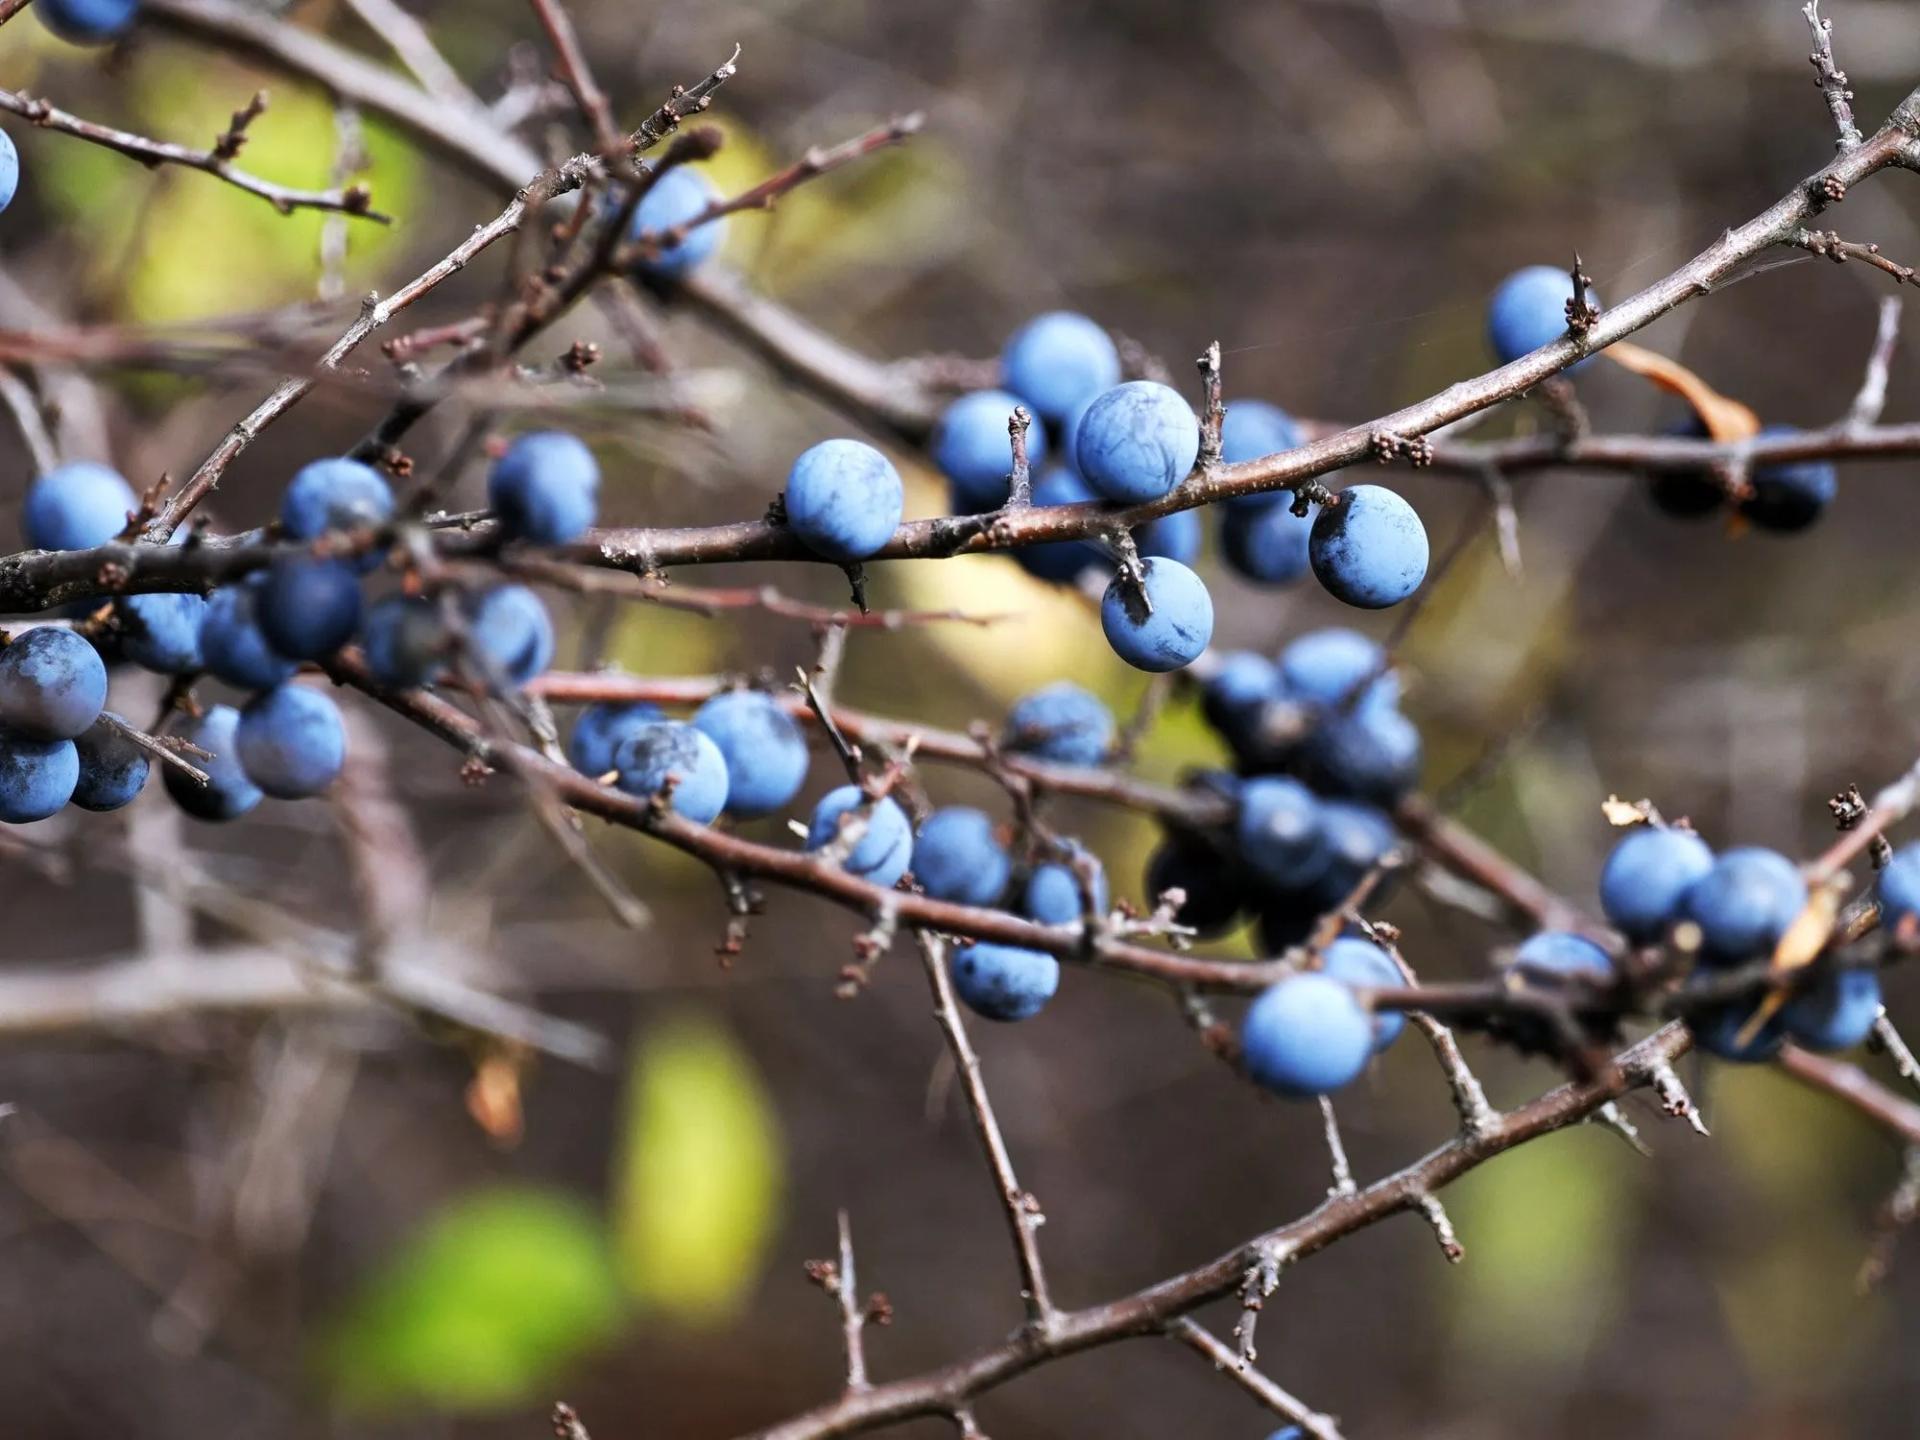 Blackthorn (Prunus spinosa) Fruit and Thorns